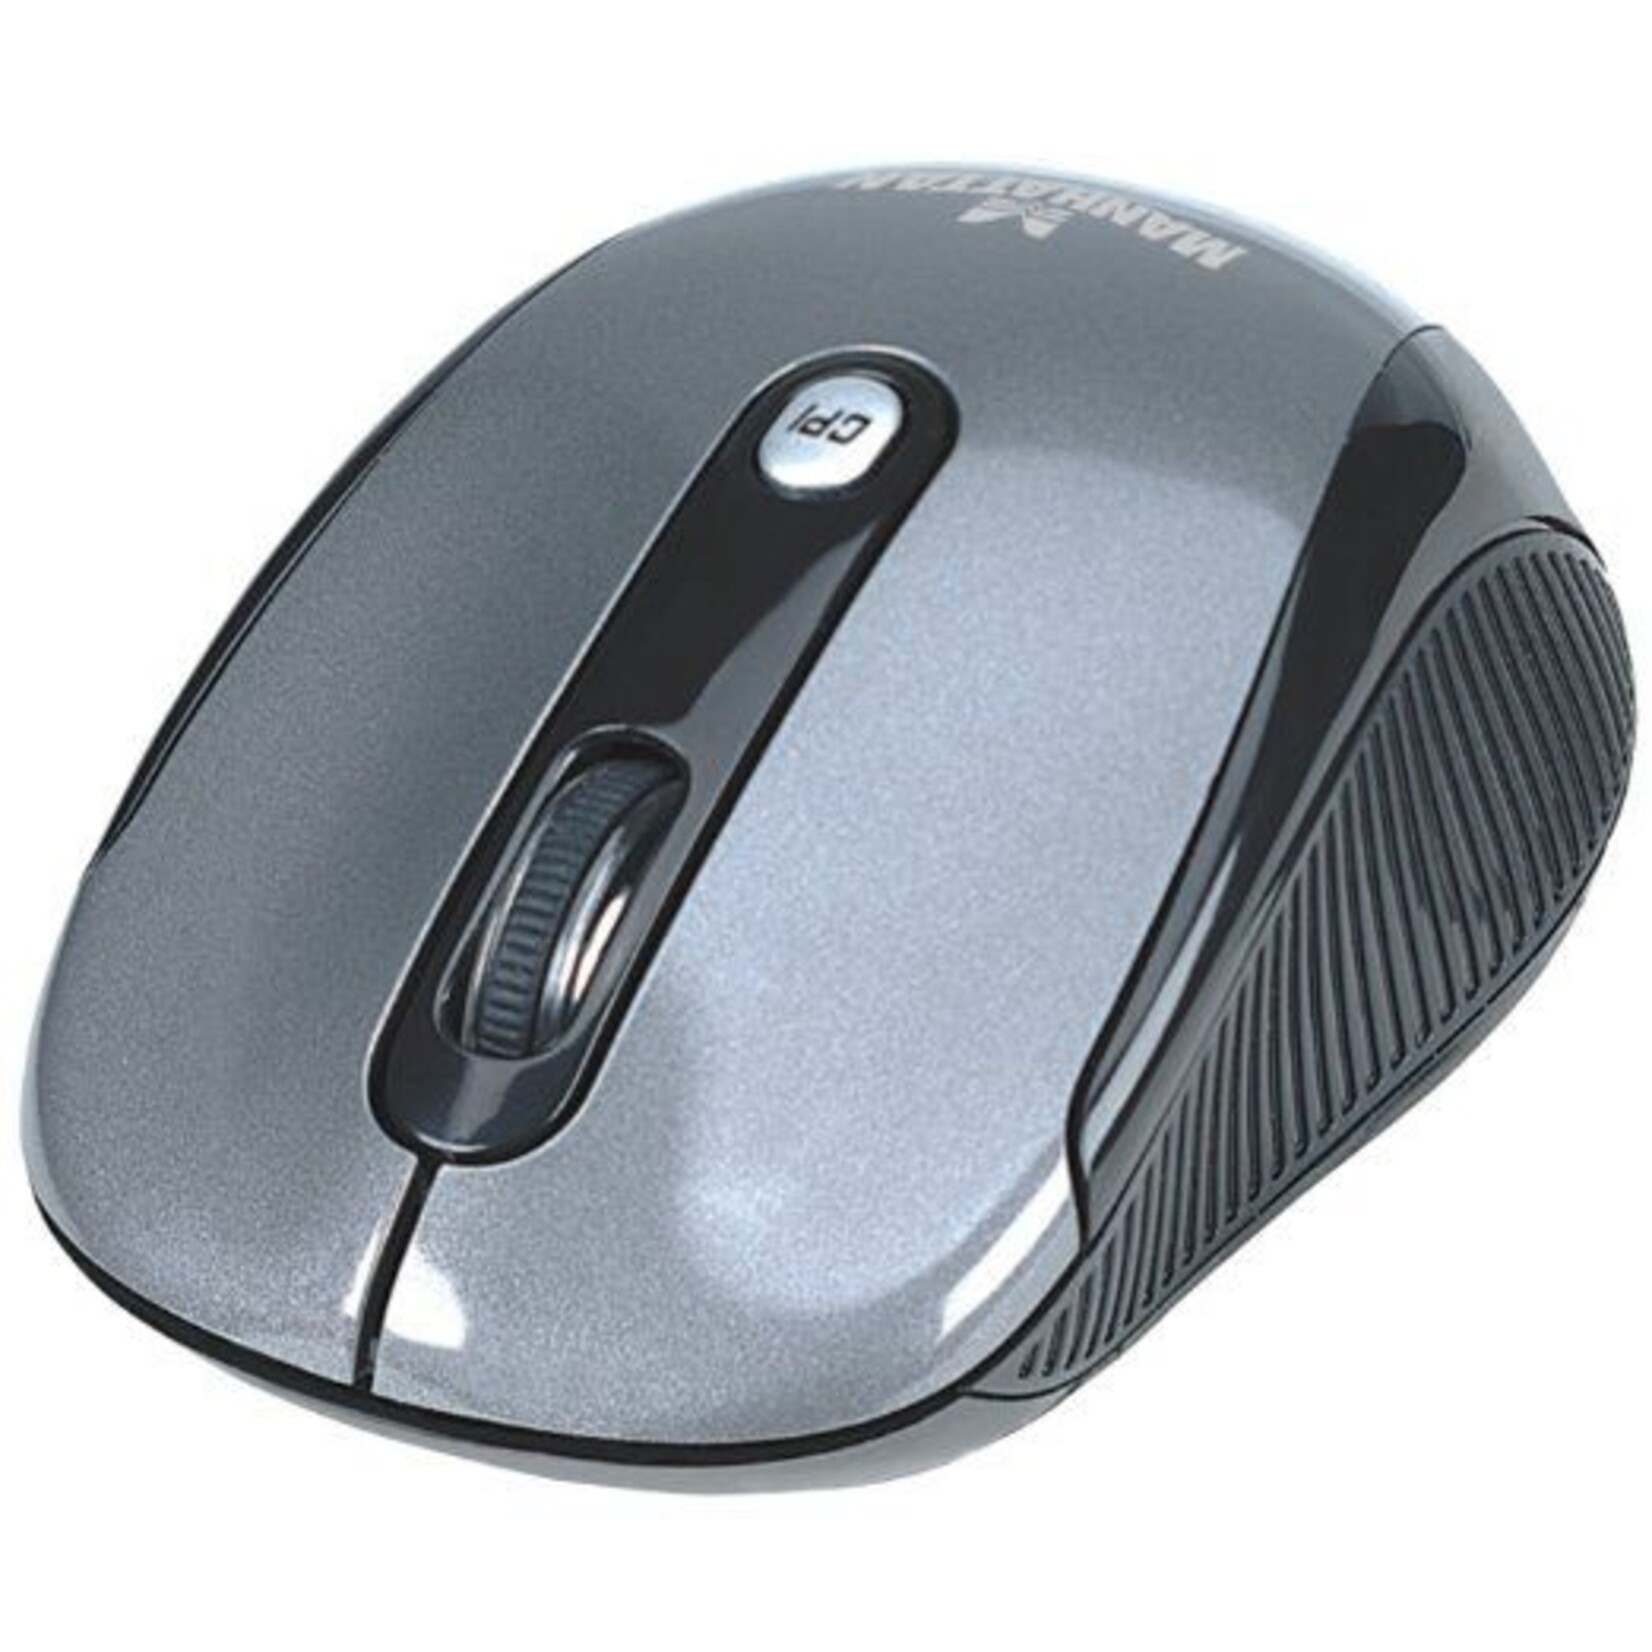 Performance Wireless Optical Mouse II